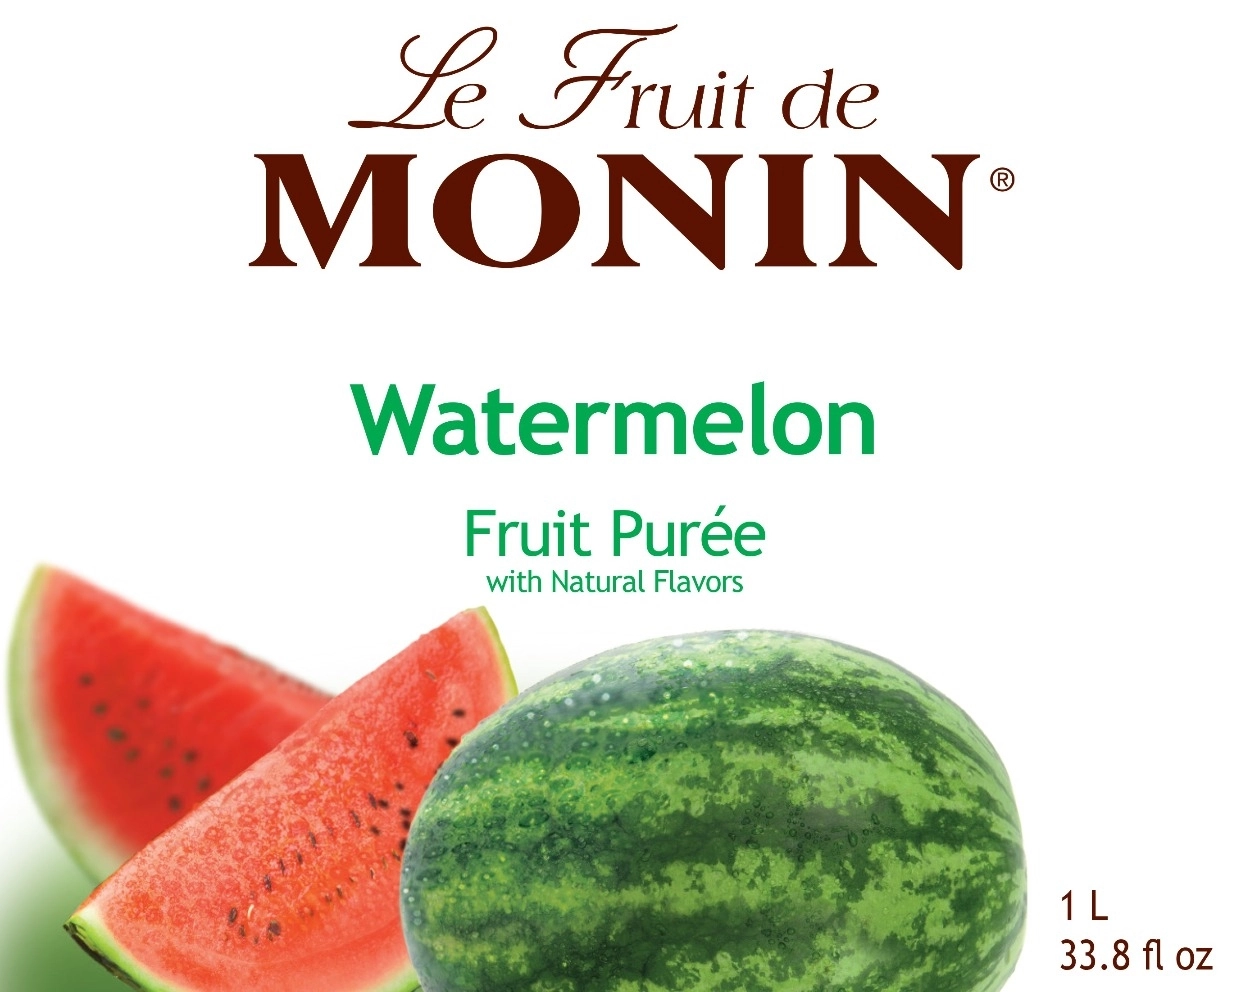 Monin Watermelon Fruit Puree brand label